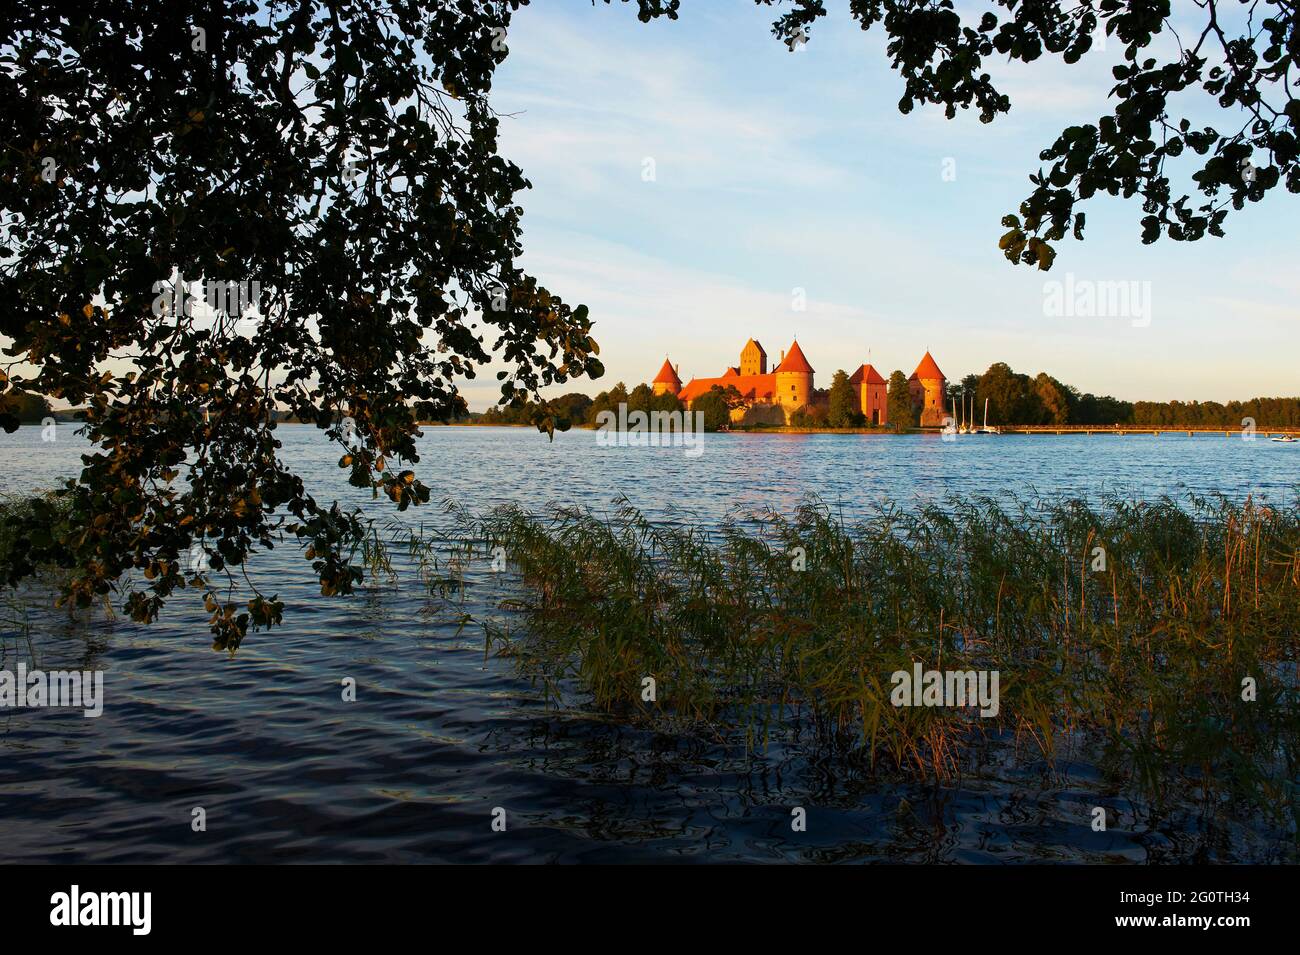 Lithuania (Baltic Countries), Island Castle of Trakai near Vilnius Stock Photo